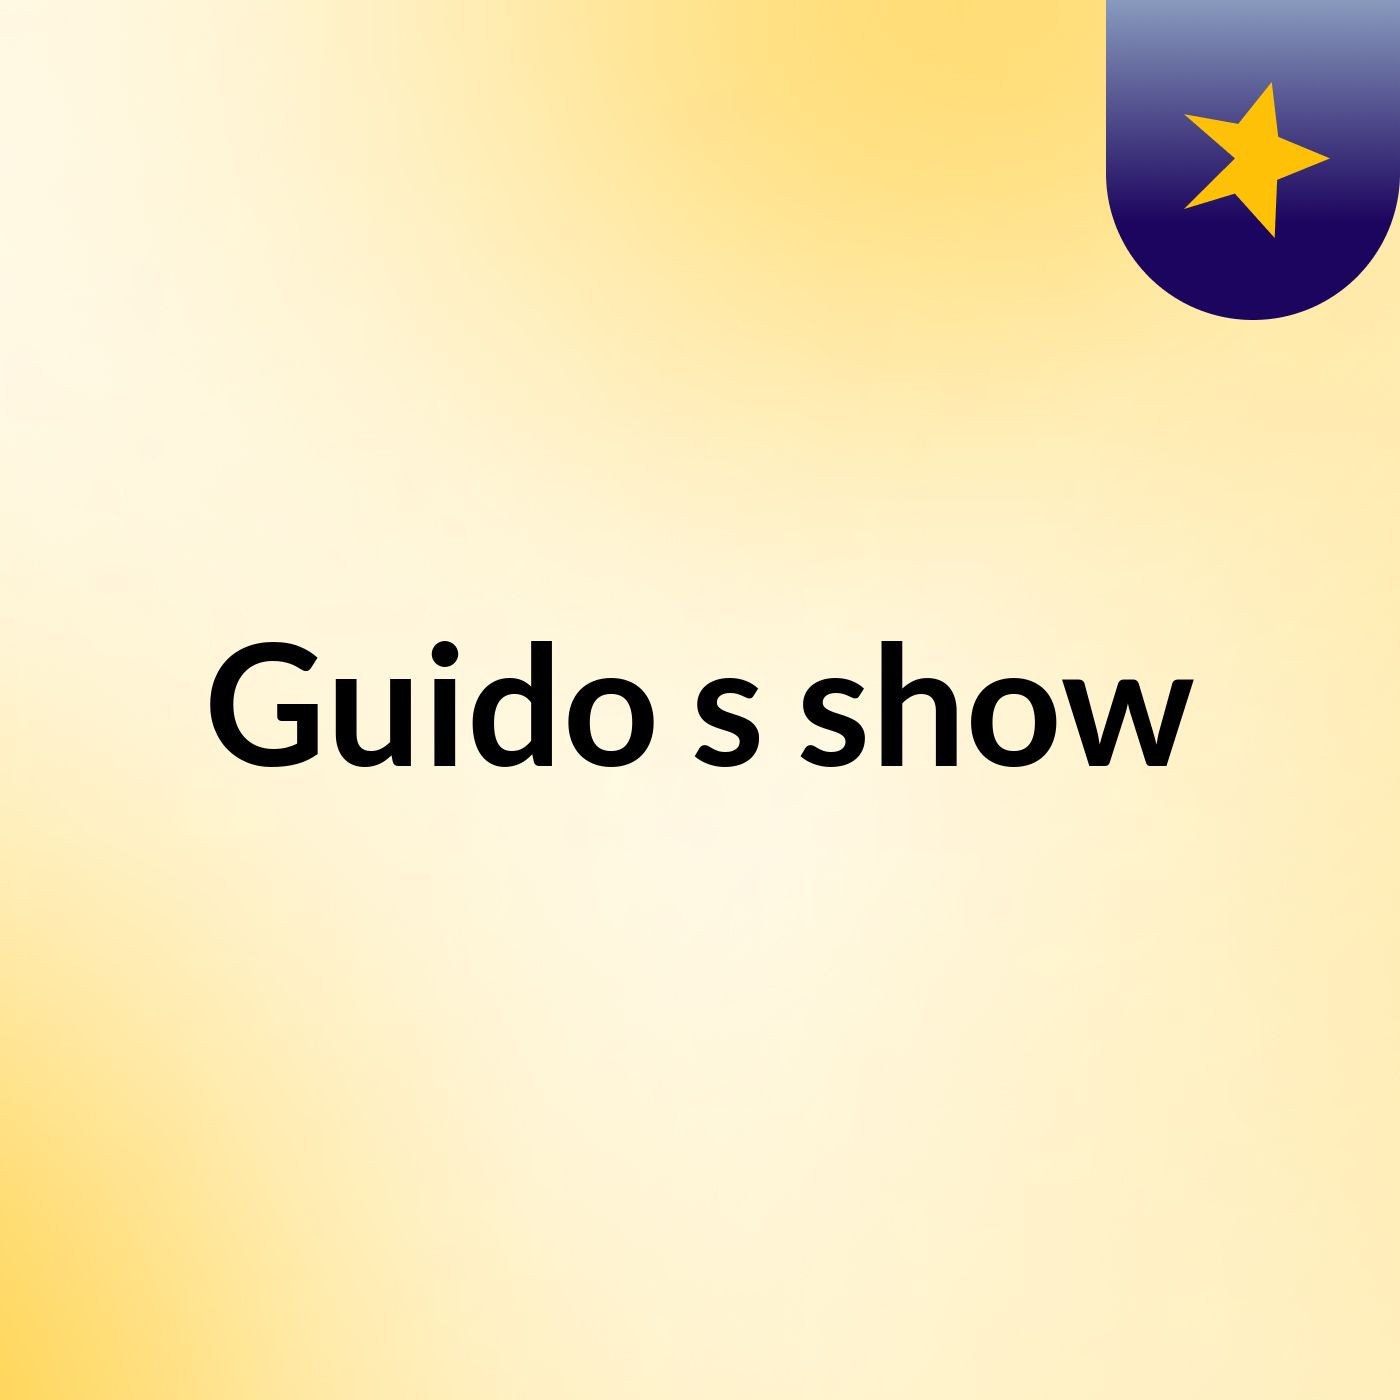 Guido's show